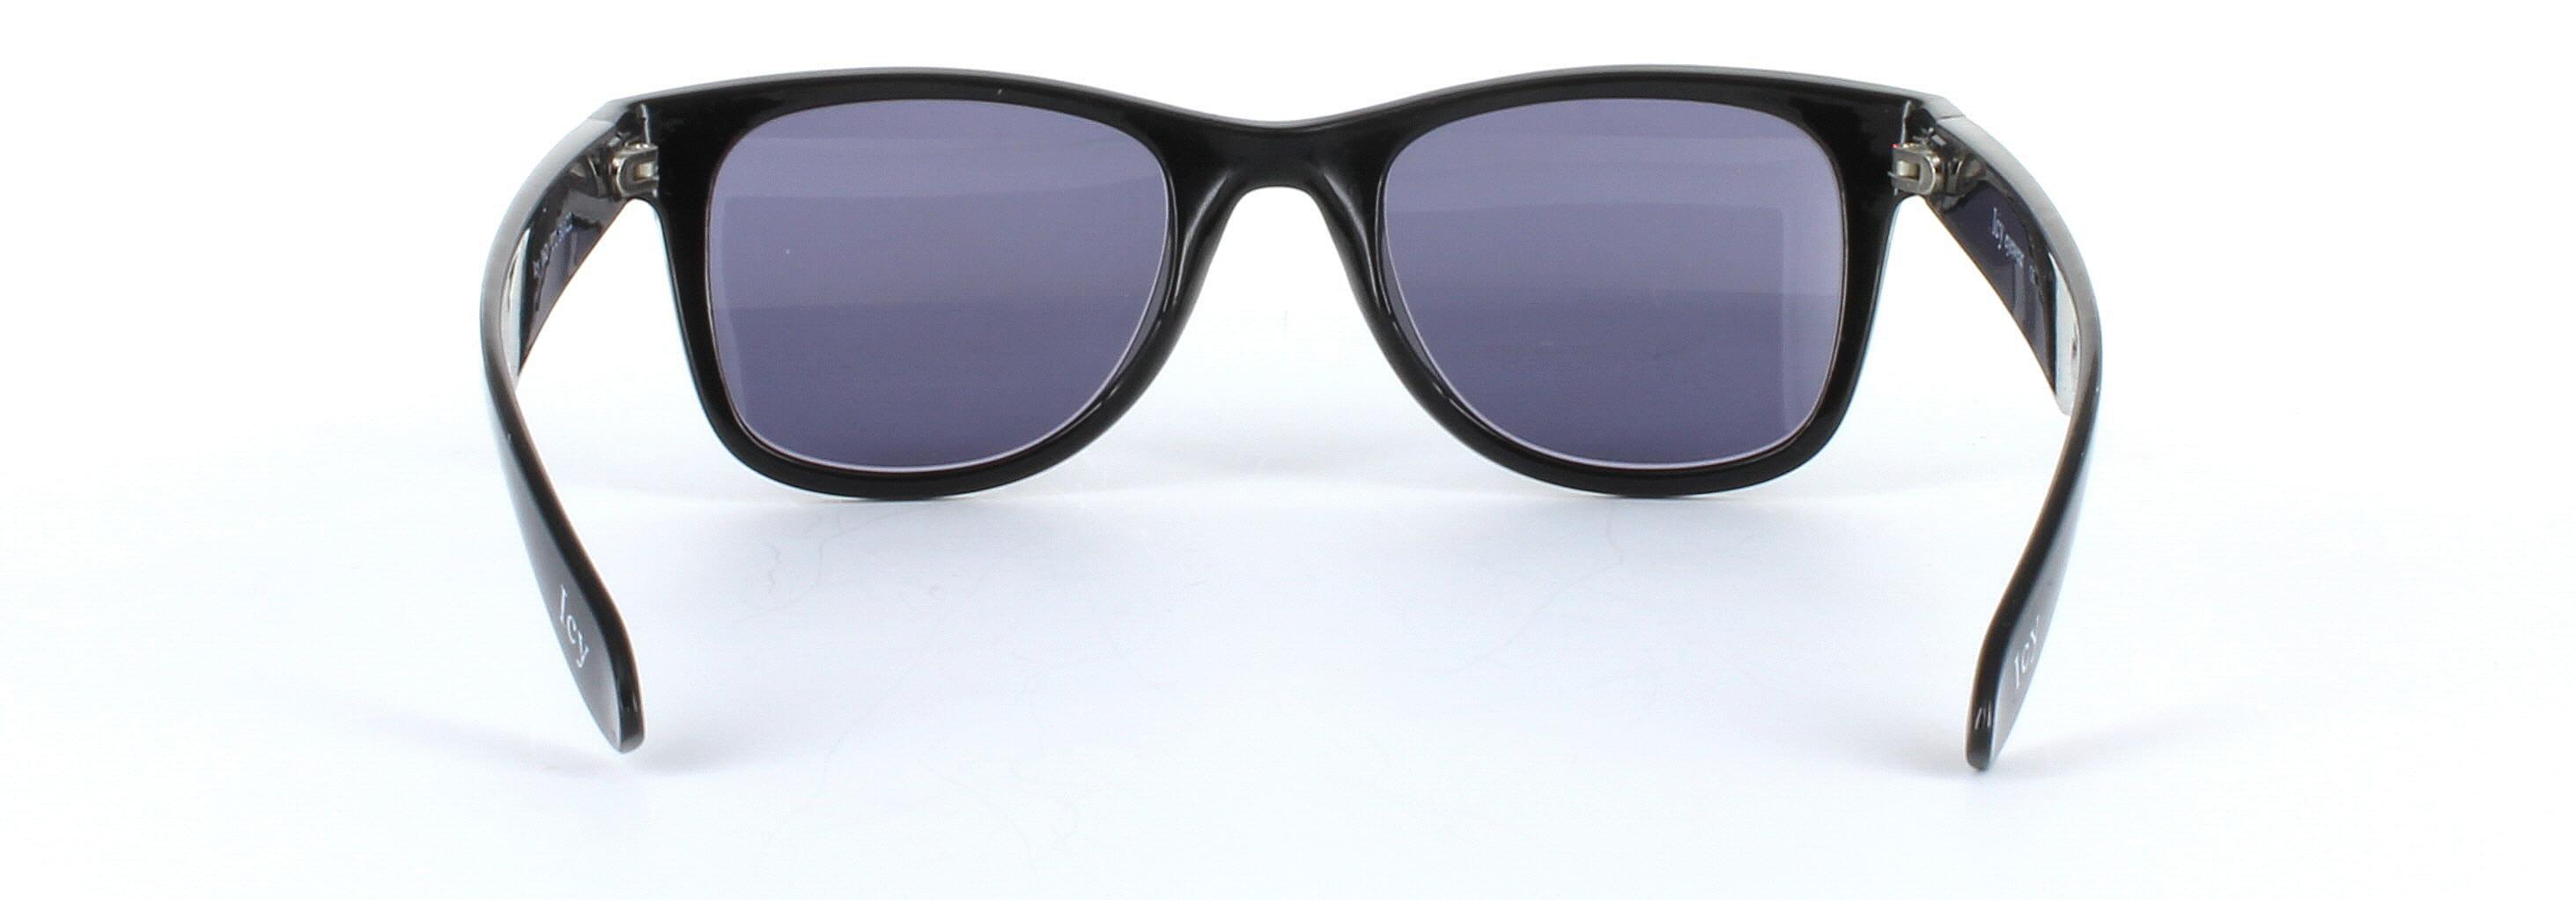 England Black Full Rim Plastic Sunglasses - Image View 3